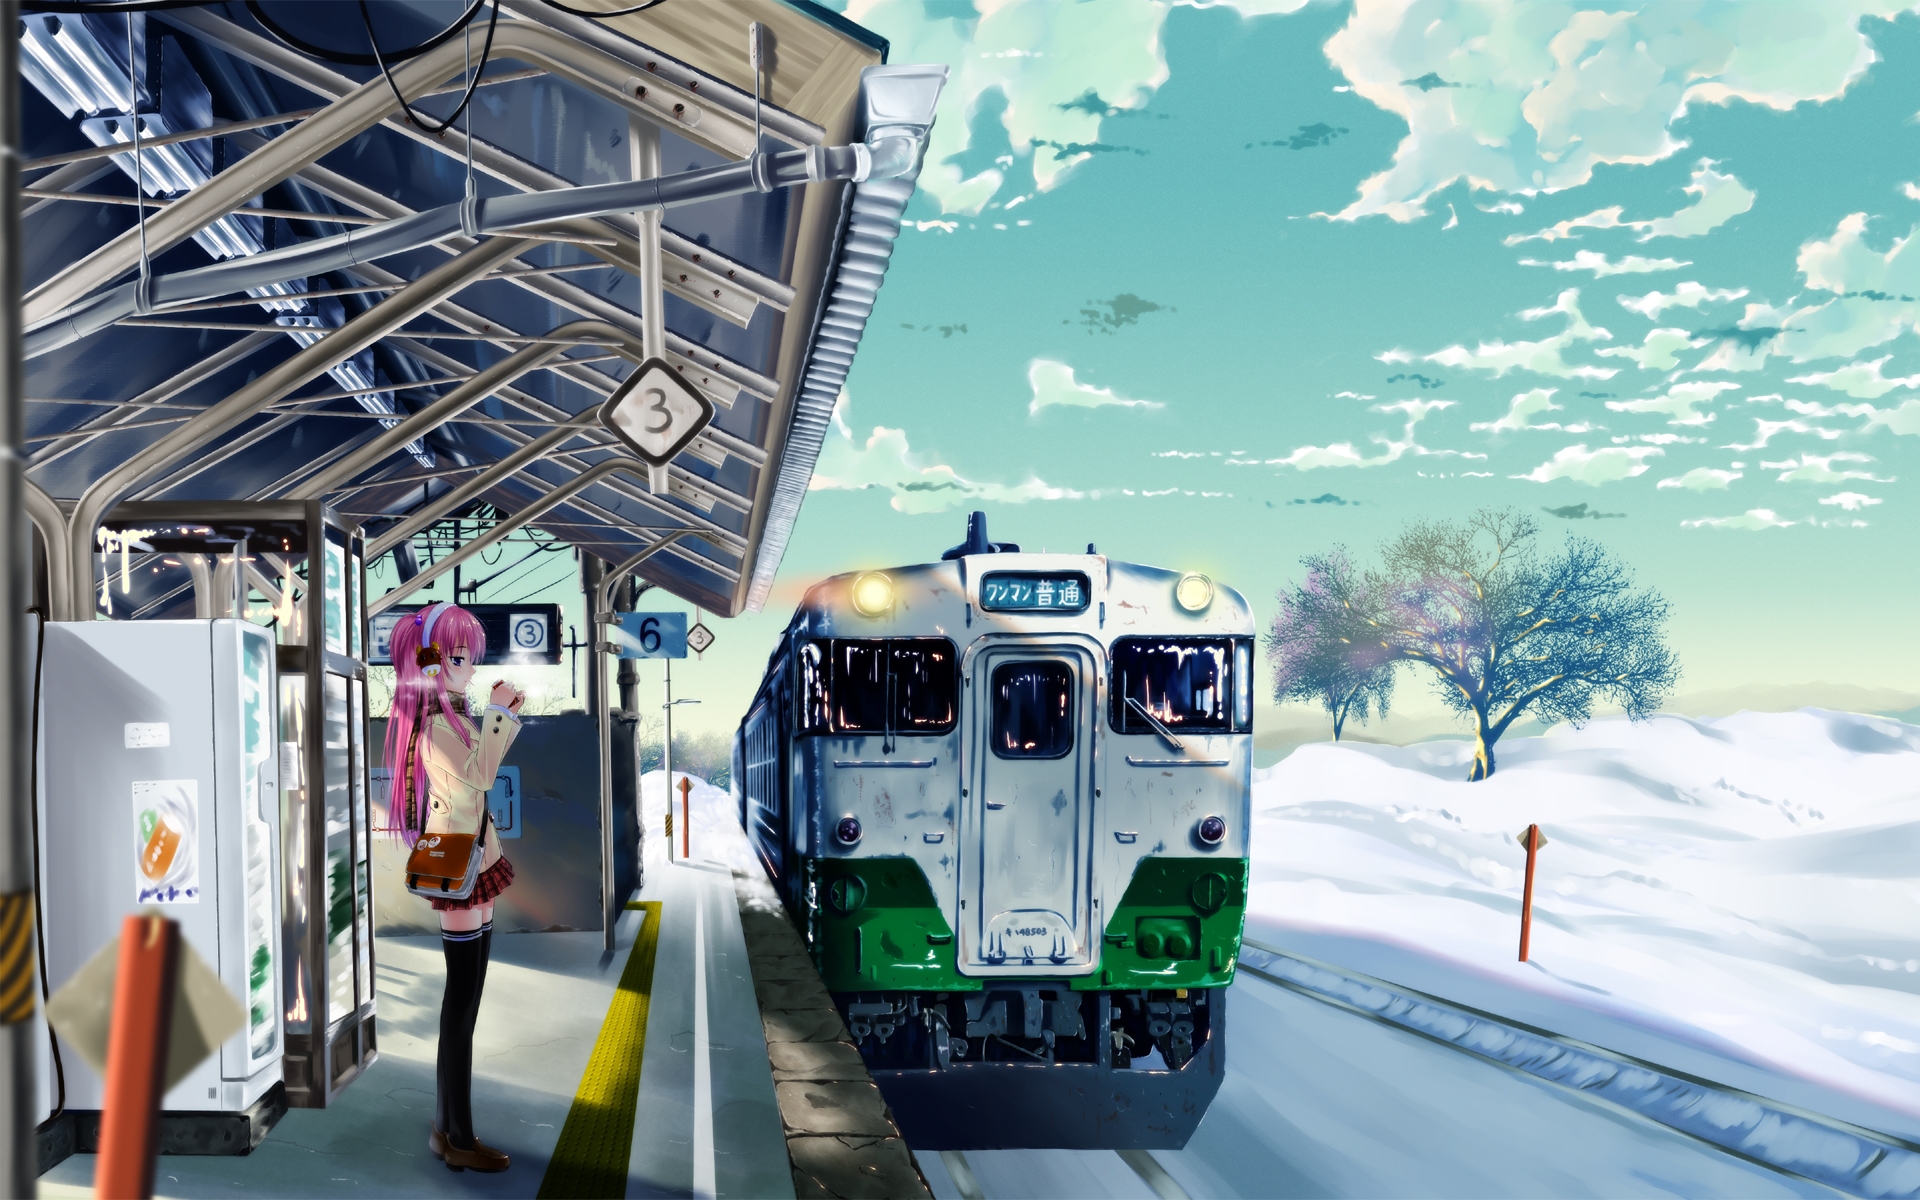 Wallpaper - Anime Guy Train Station - HD Wallpaper 